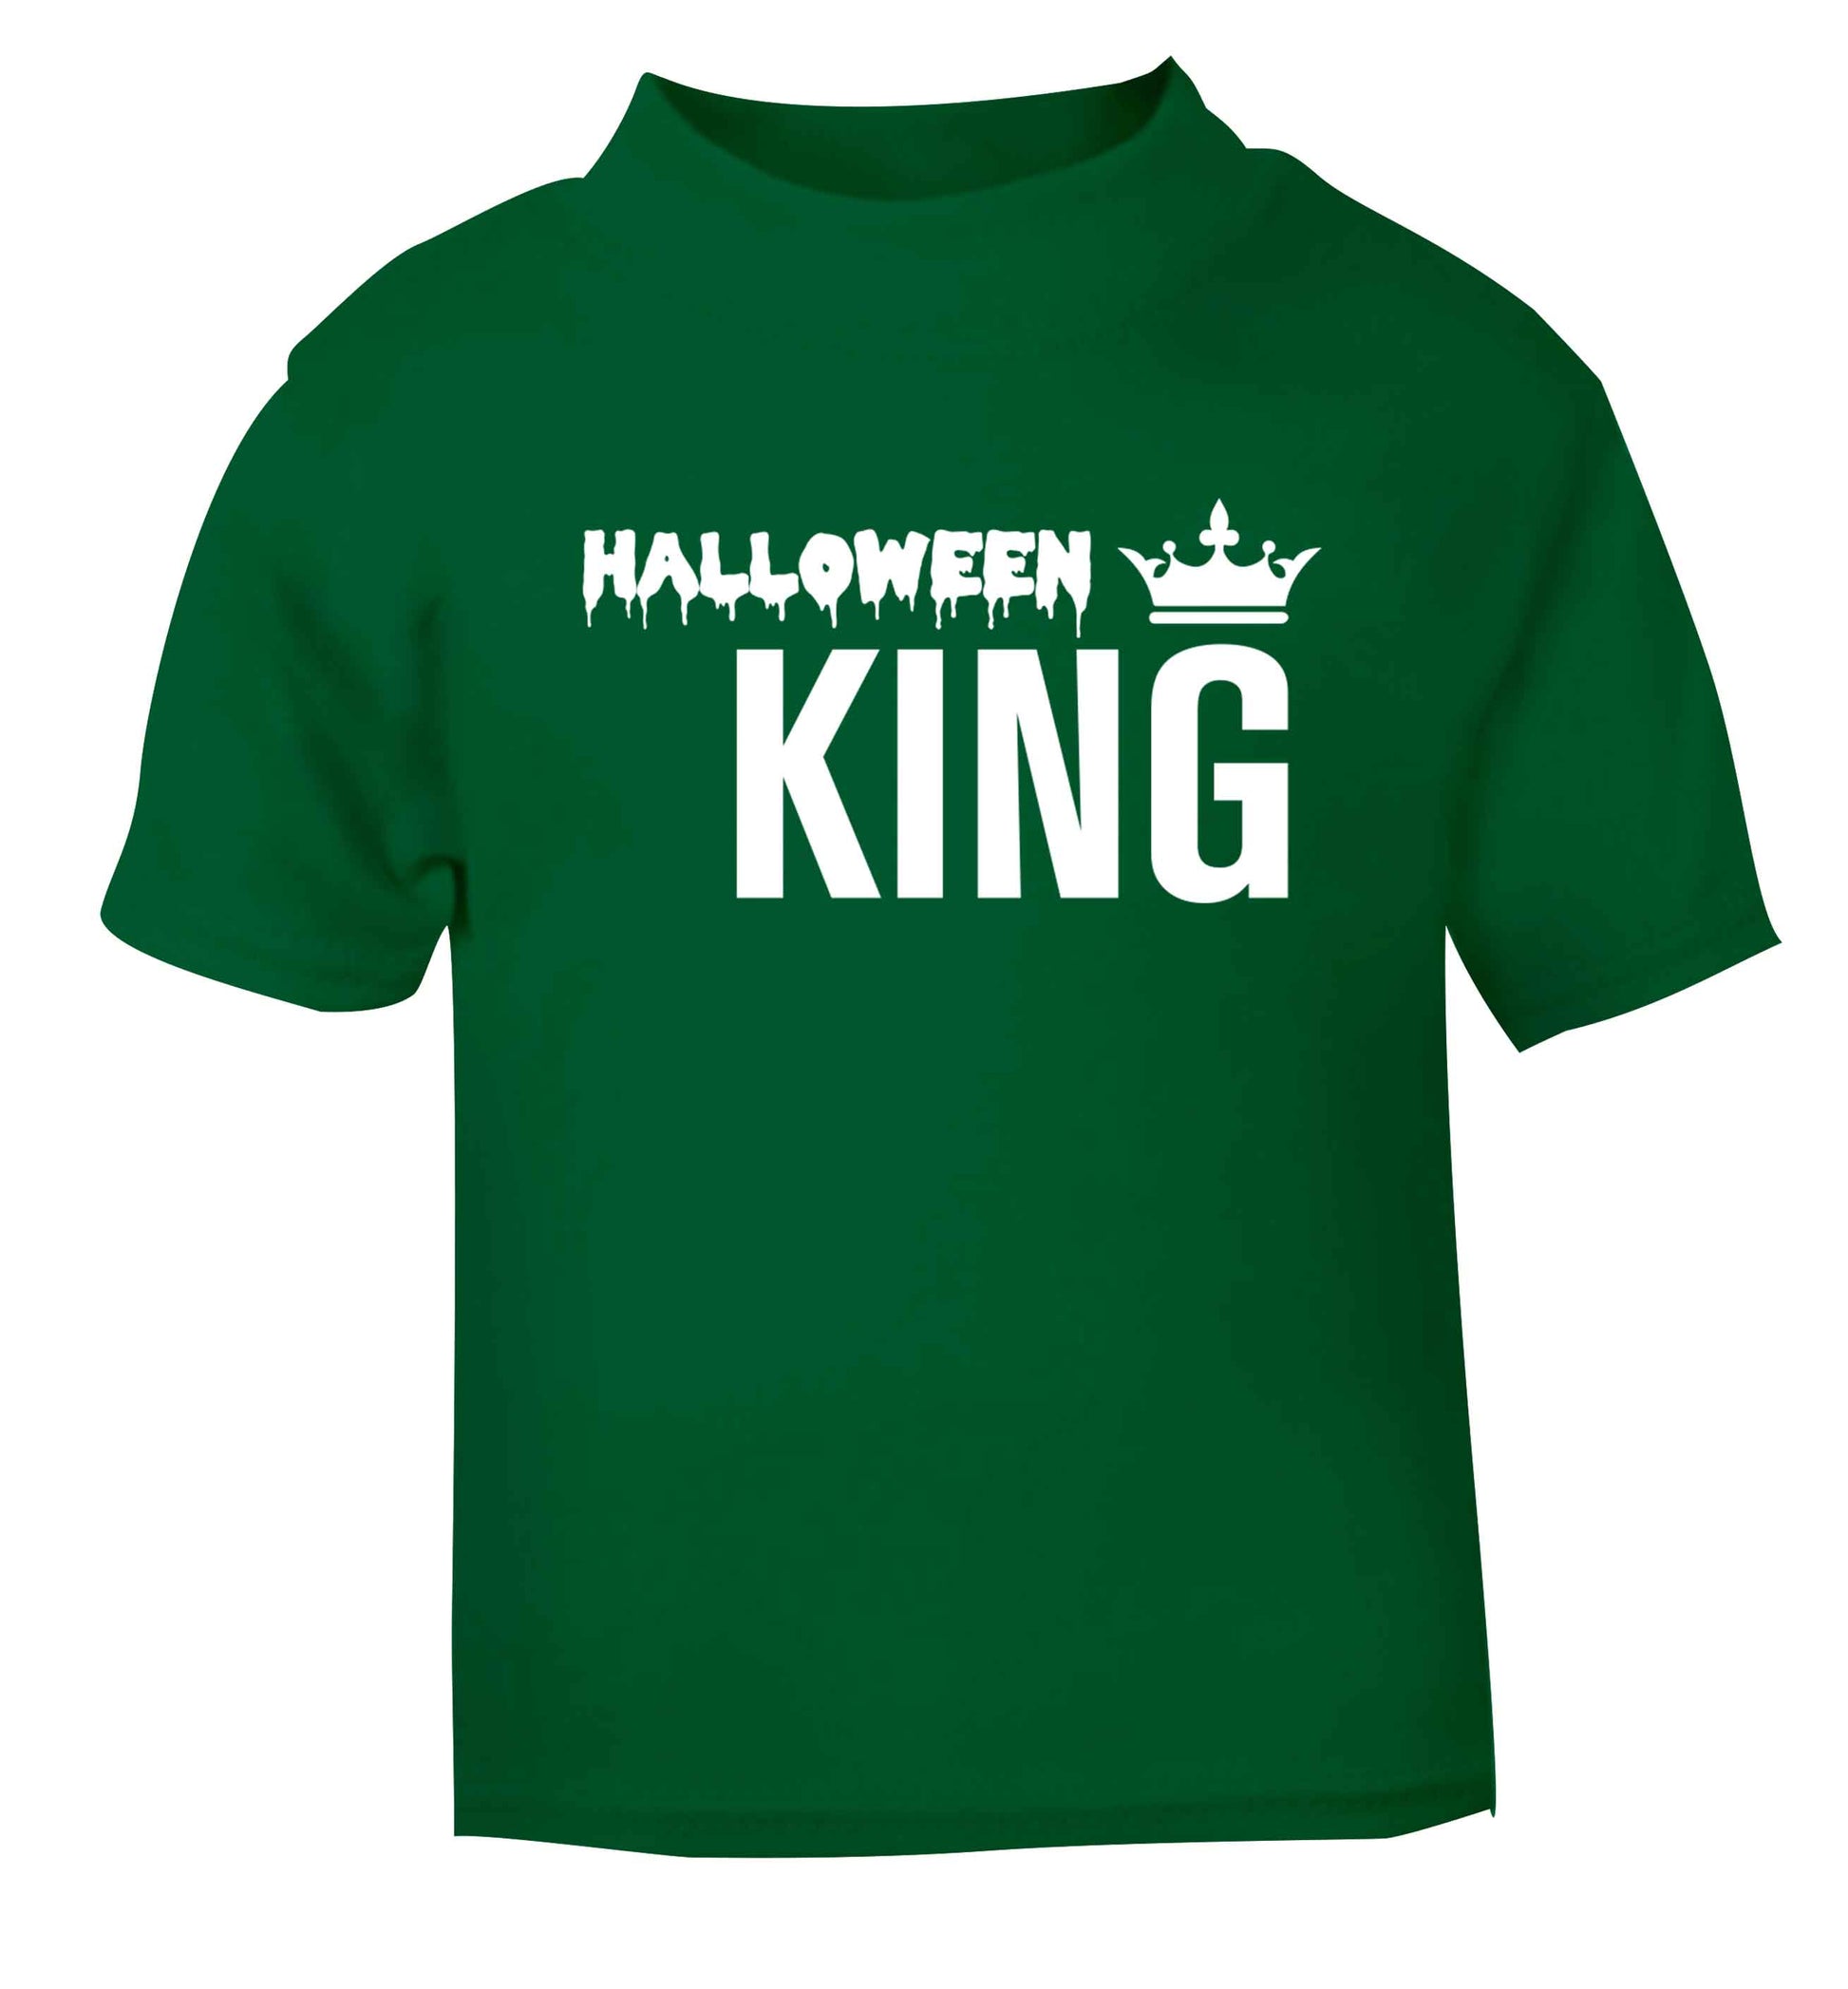 Halloween king green baby toddler Tshirt 2 Years